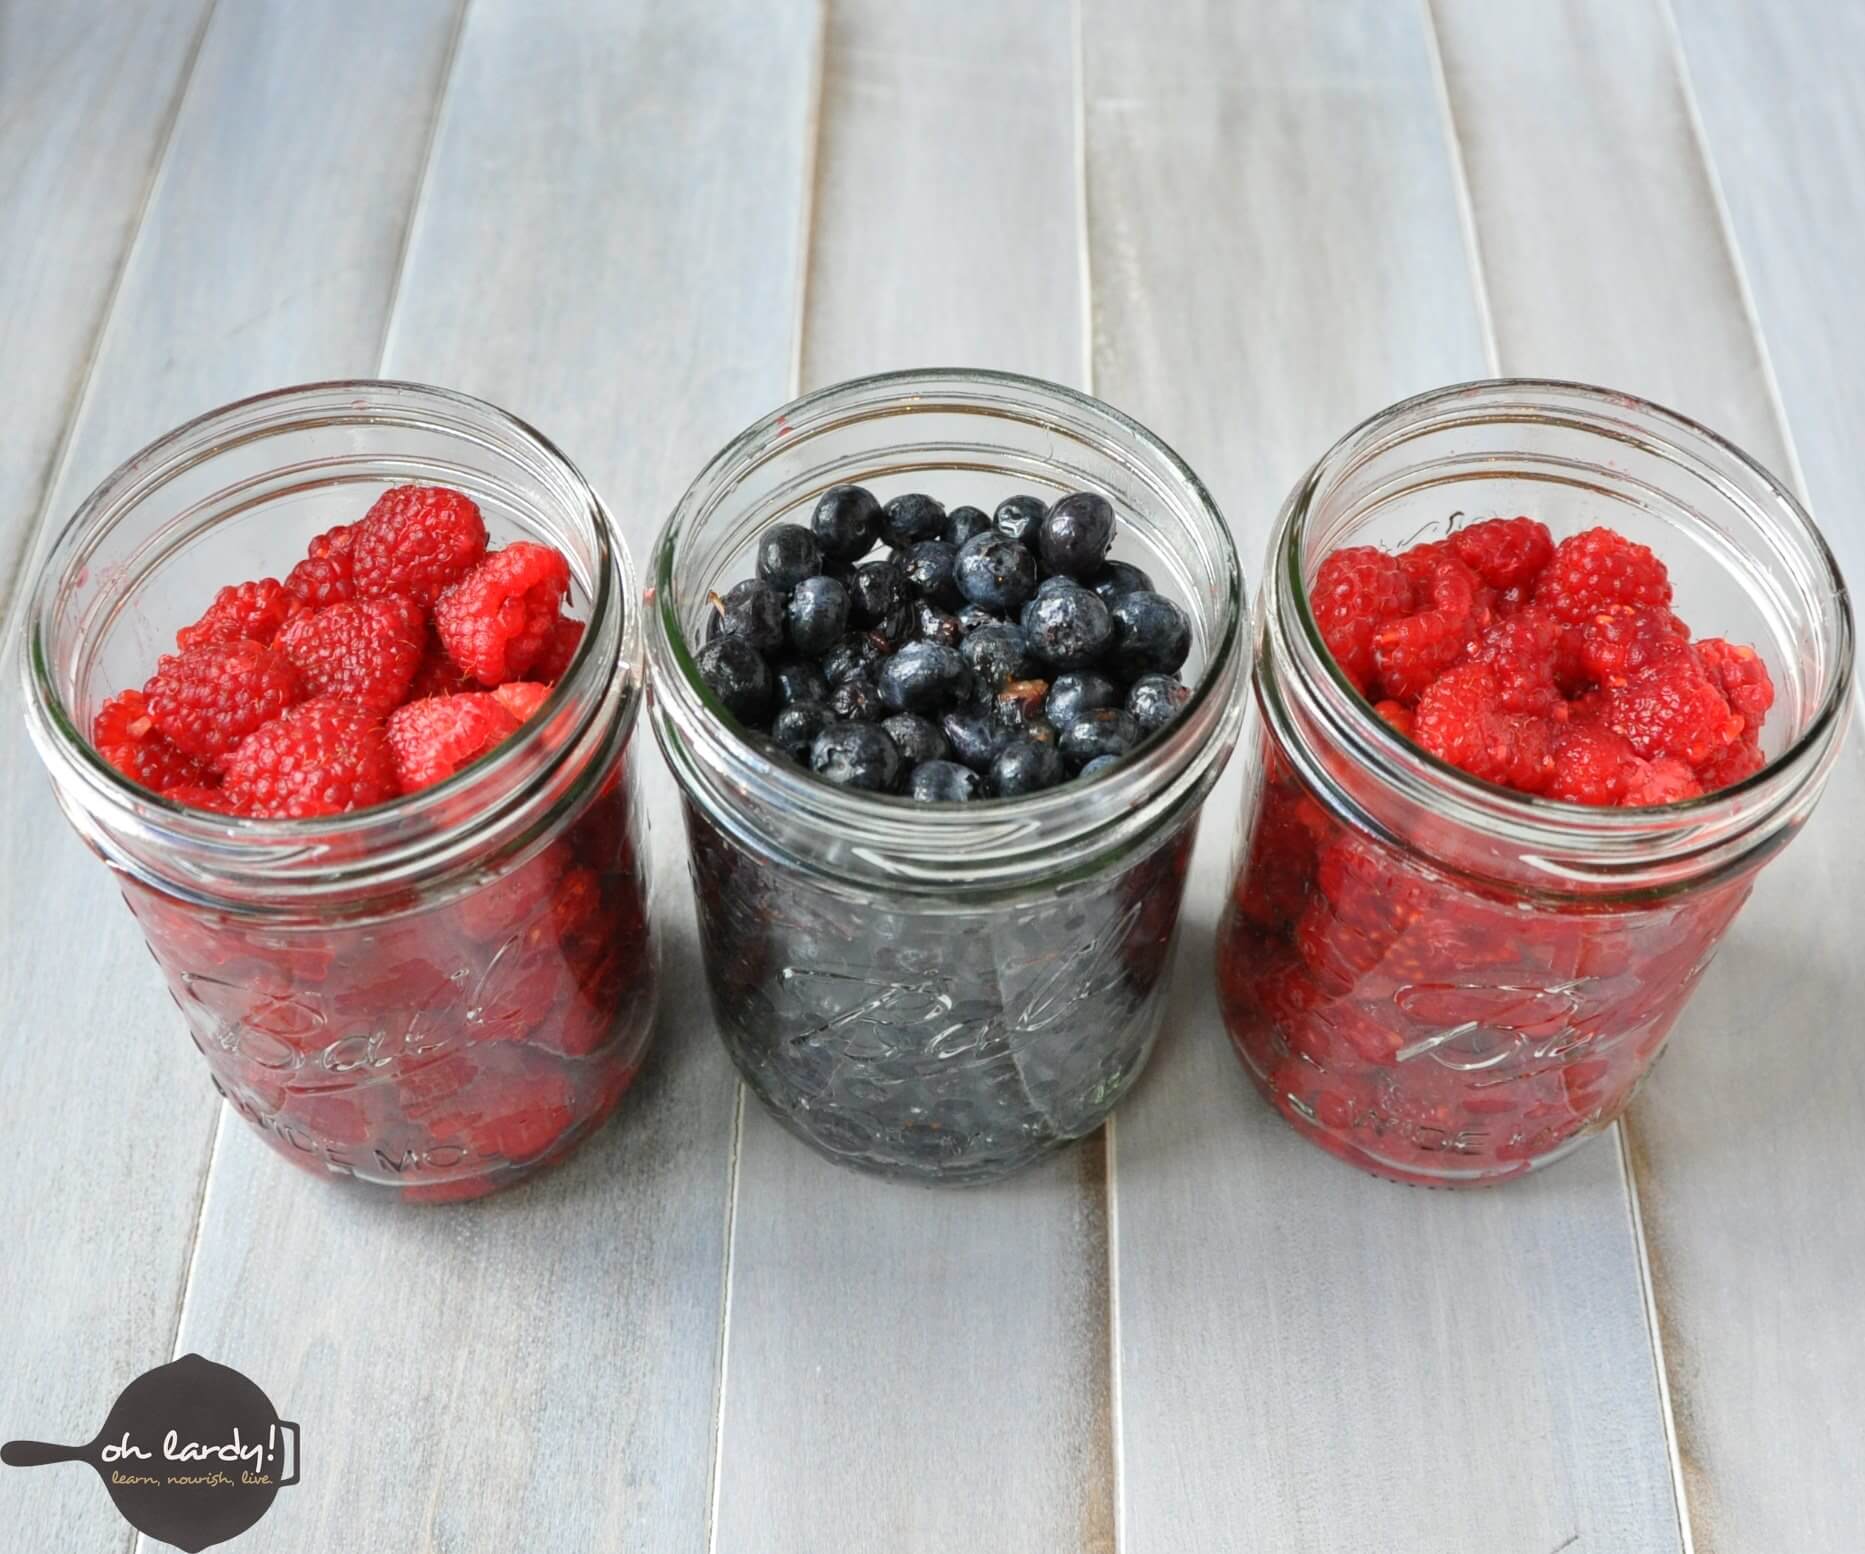 Cultured Raspberries and Blueberries - Oh Lardy